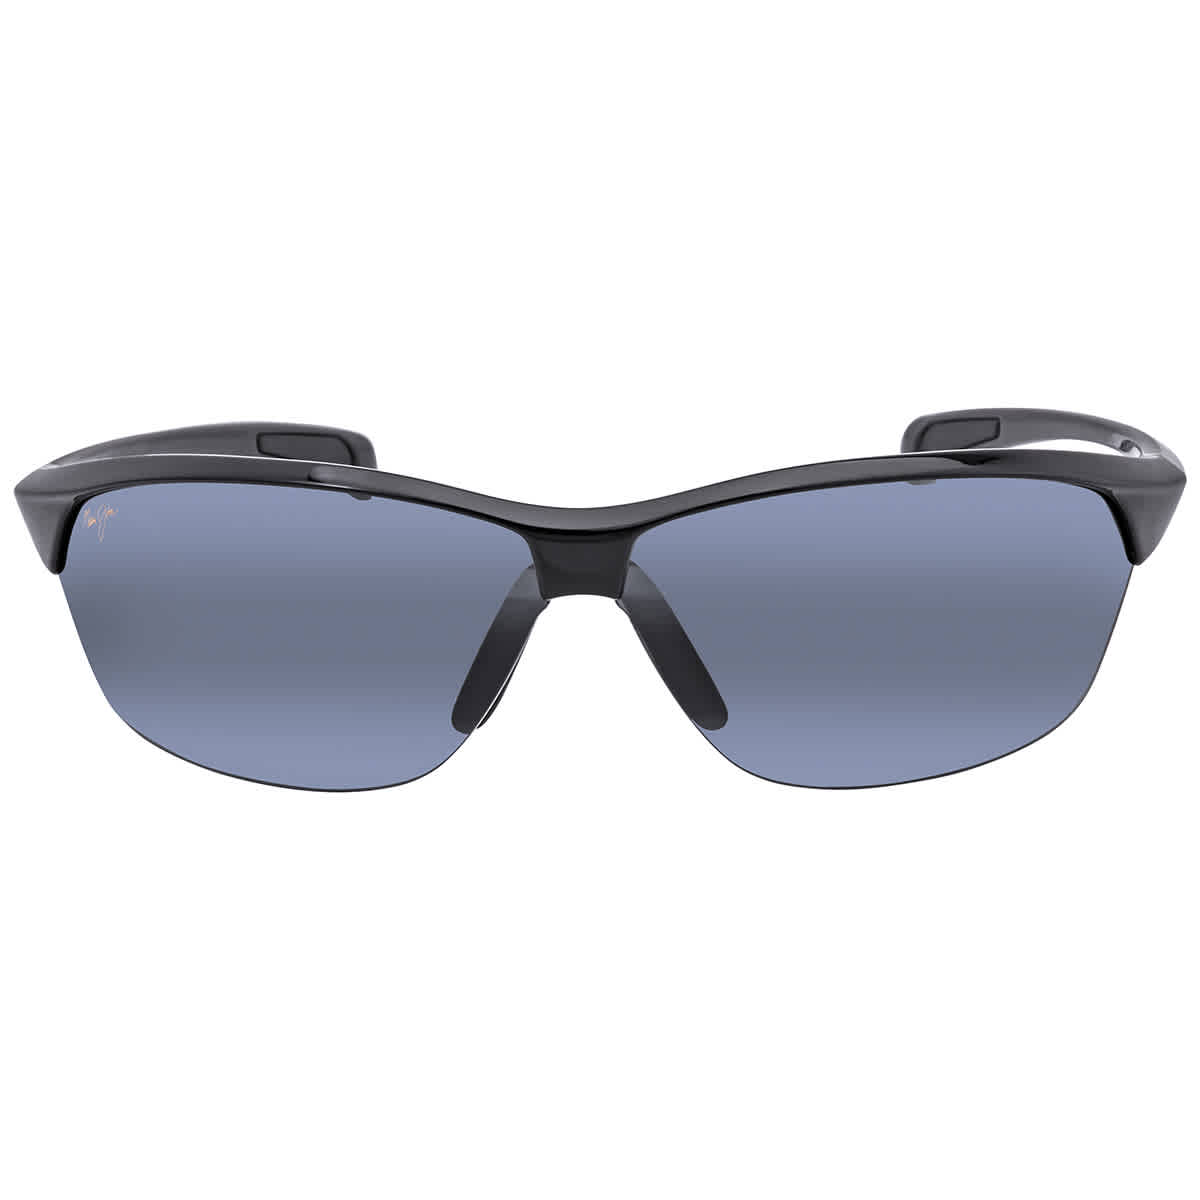 Maui Jim Hot Sands Polarized Grey Rectangular Sunglasses 426-02 71 In Black,grey